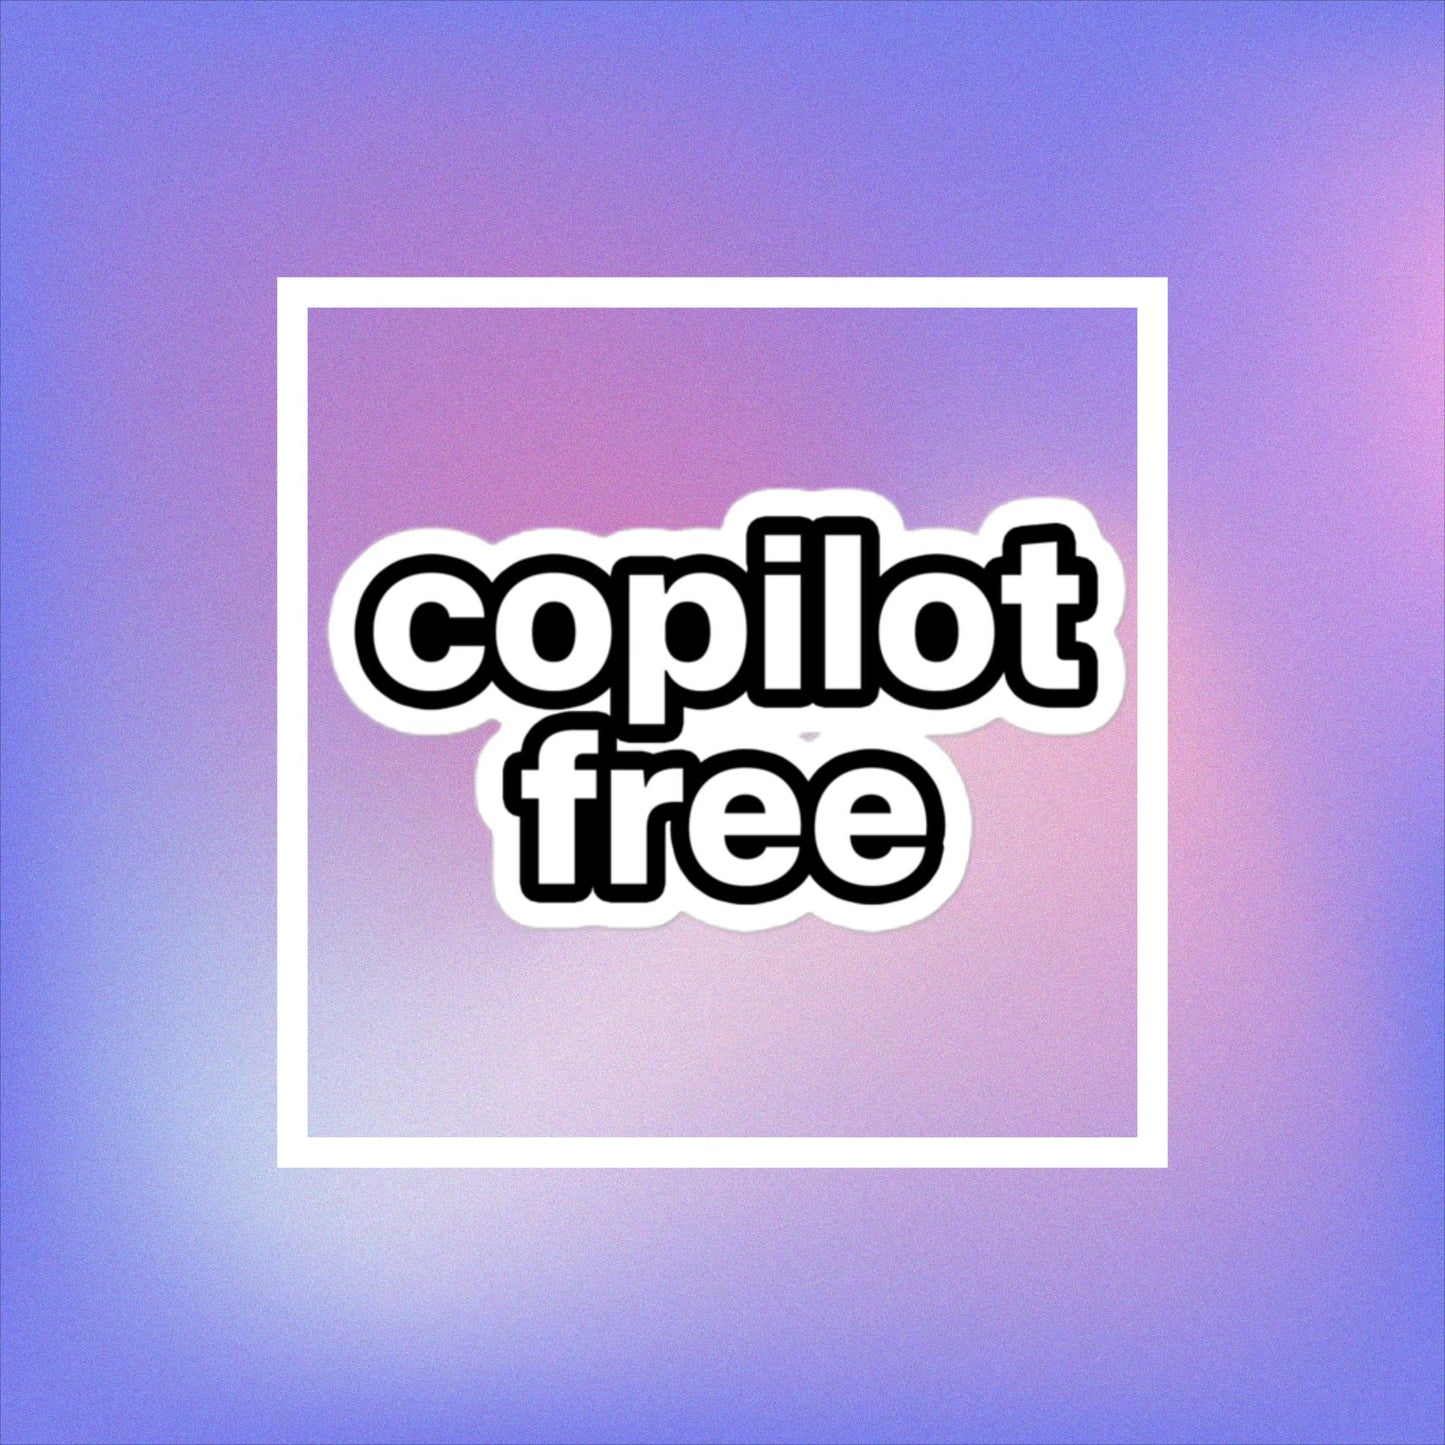 "copilot free" sticker